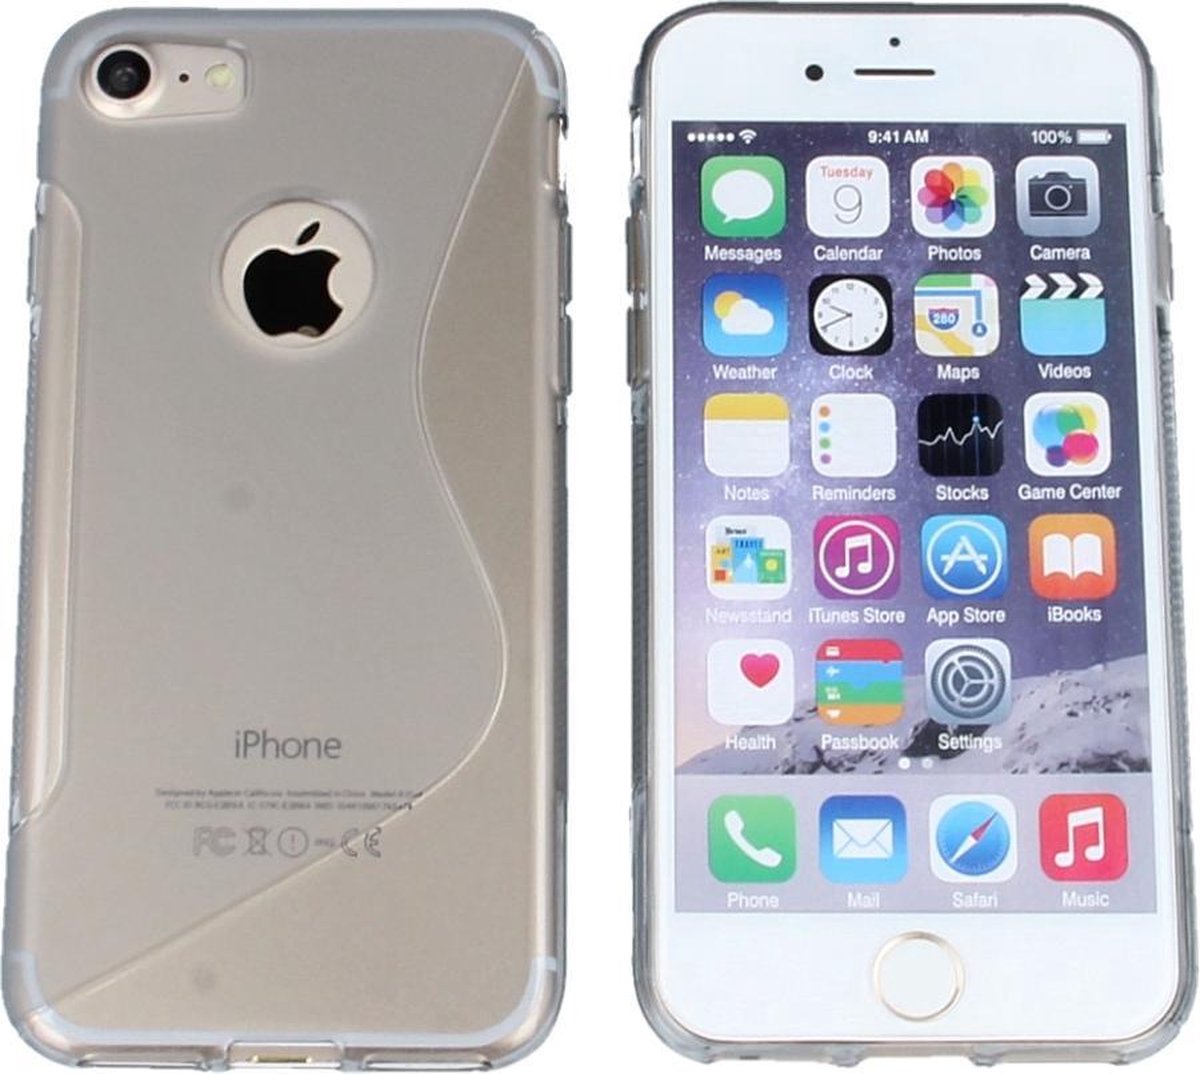 S Line Gel Silicone Case Hoesje Transparant Grijs Grey voor Apple iPhone 7